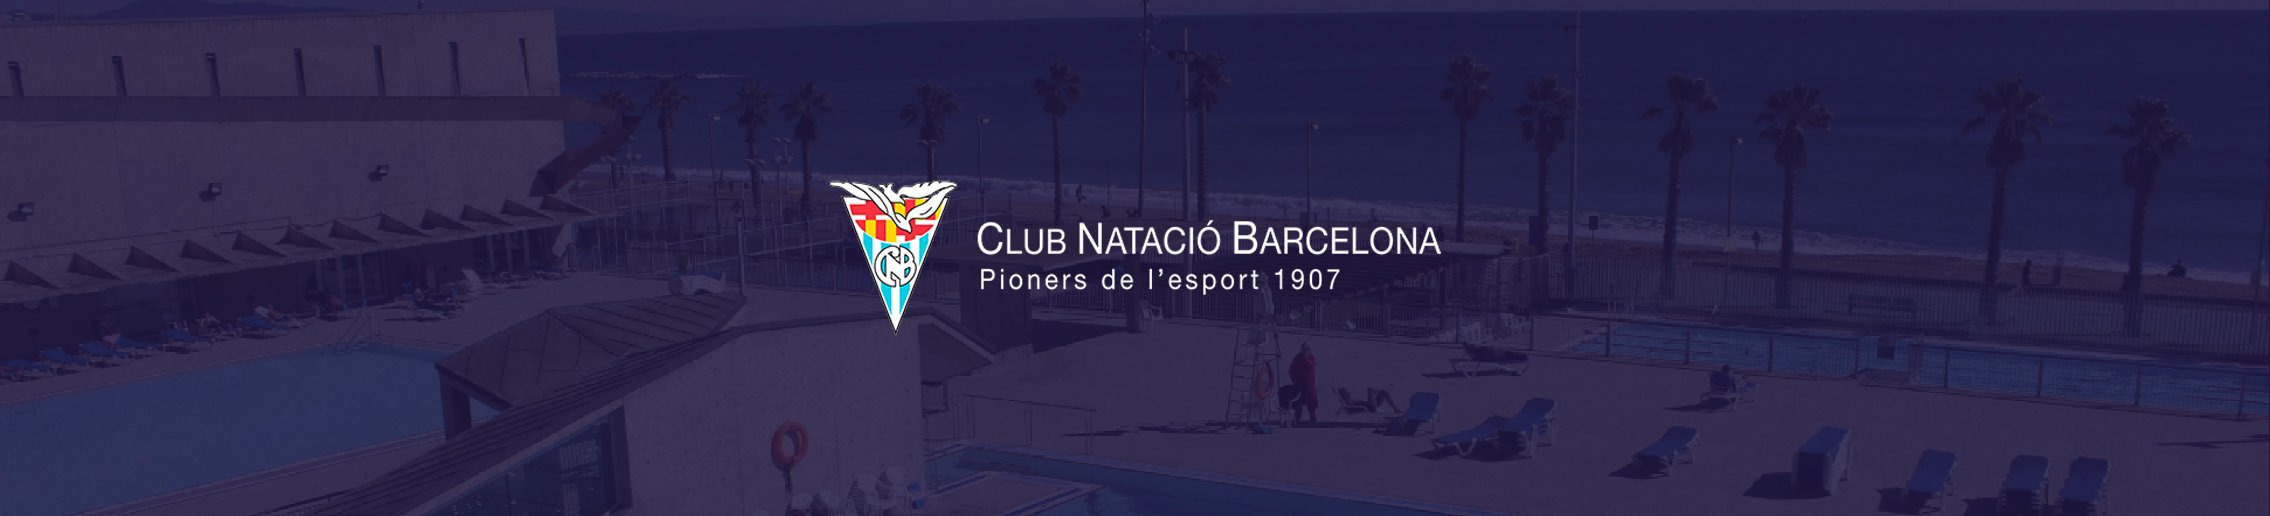 club-natacio-barcelona